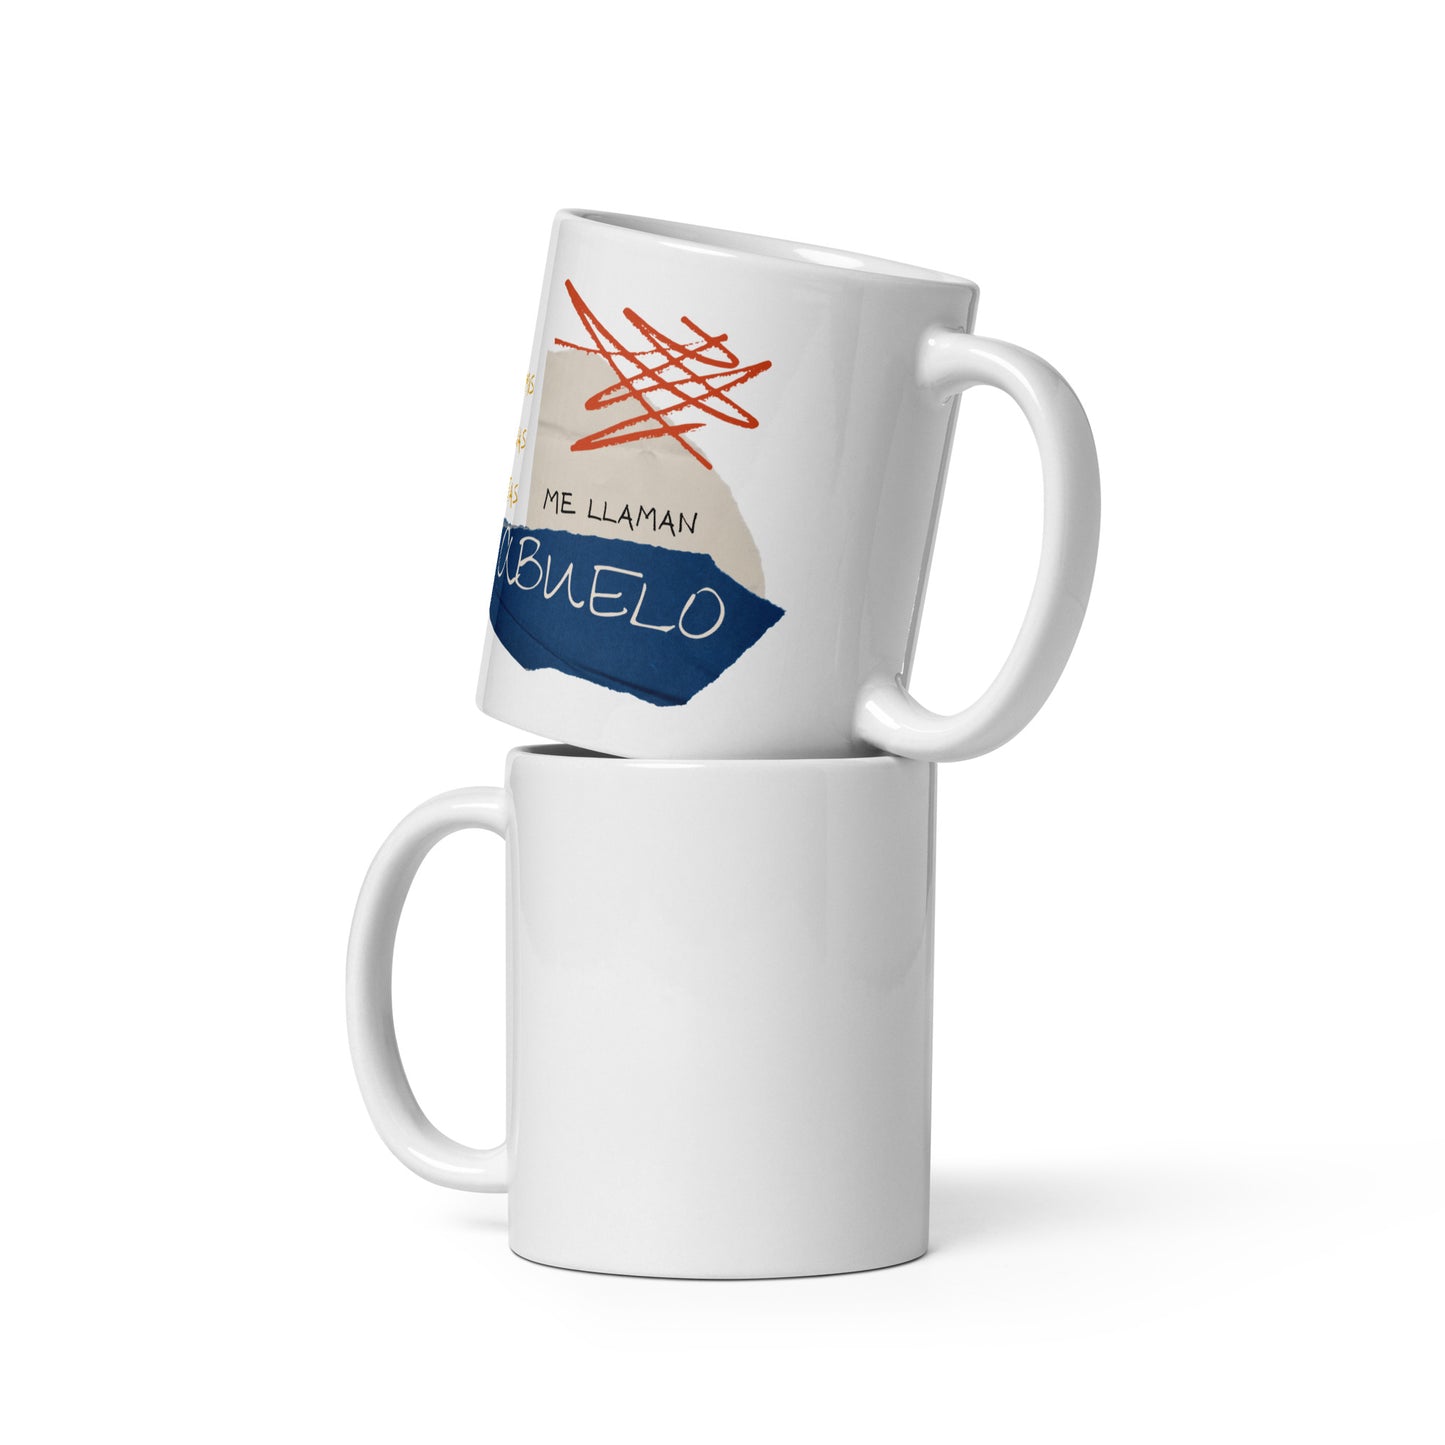 Abuelo - White glossy mug